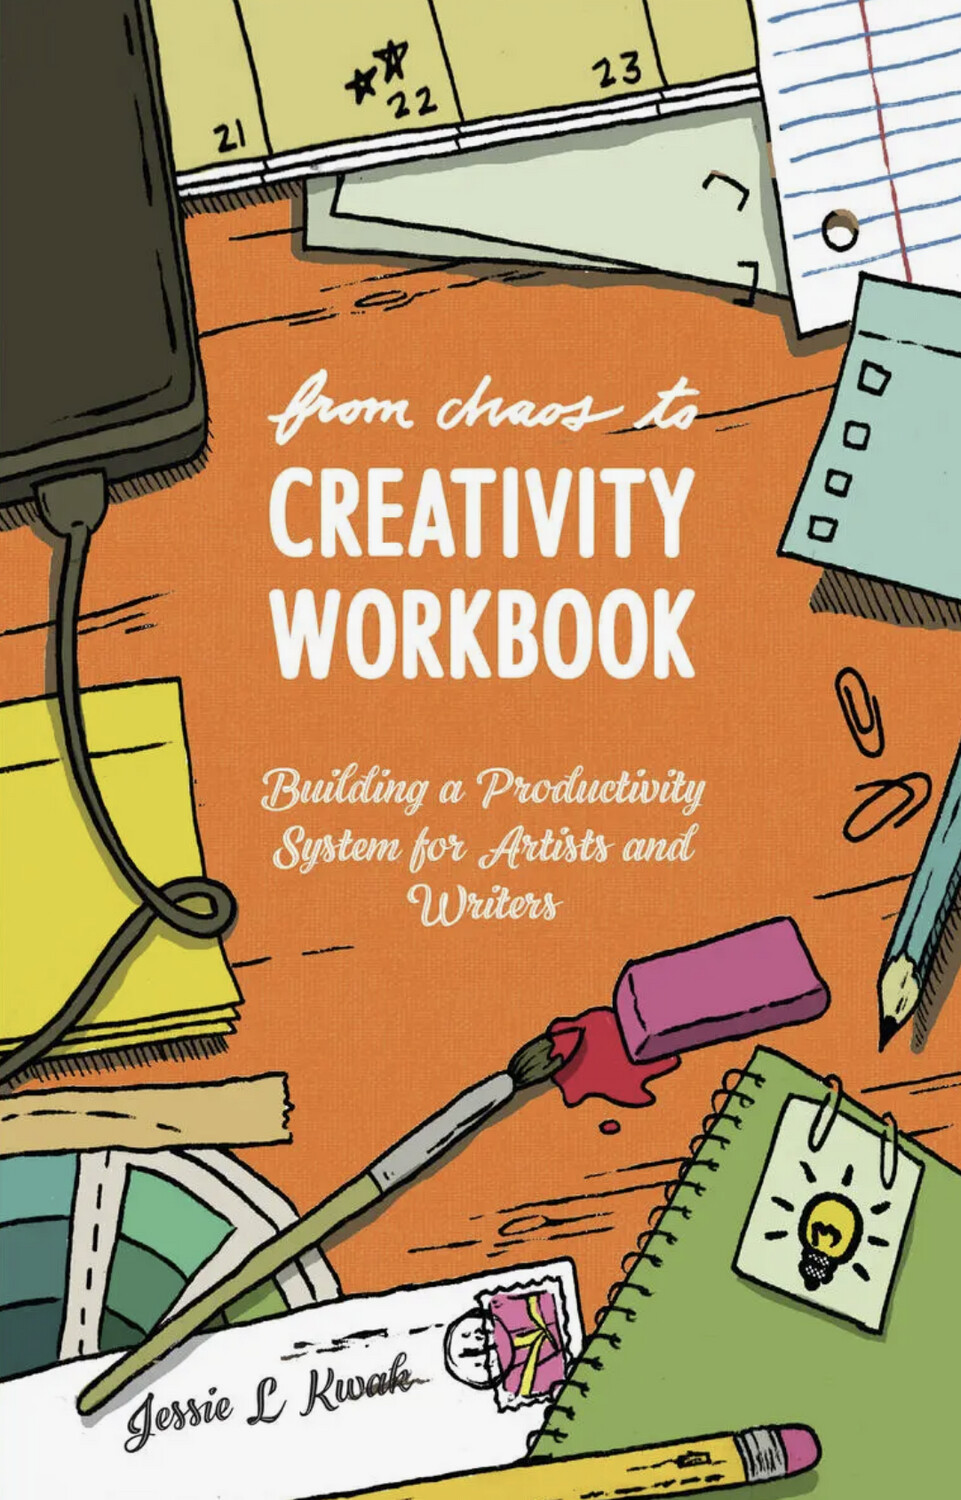 From Chaos to Creativity - Workbook by Jessie L Kwak